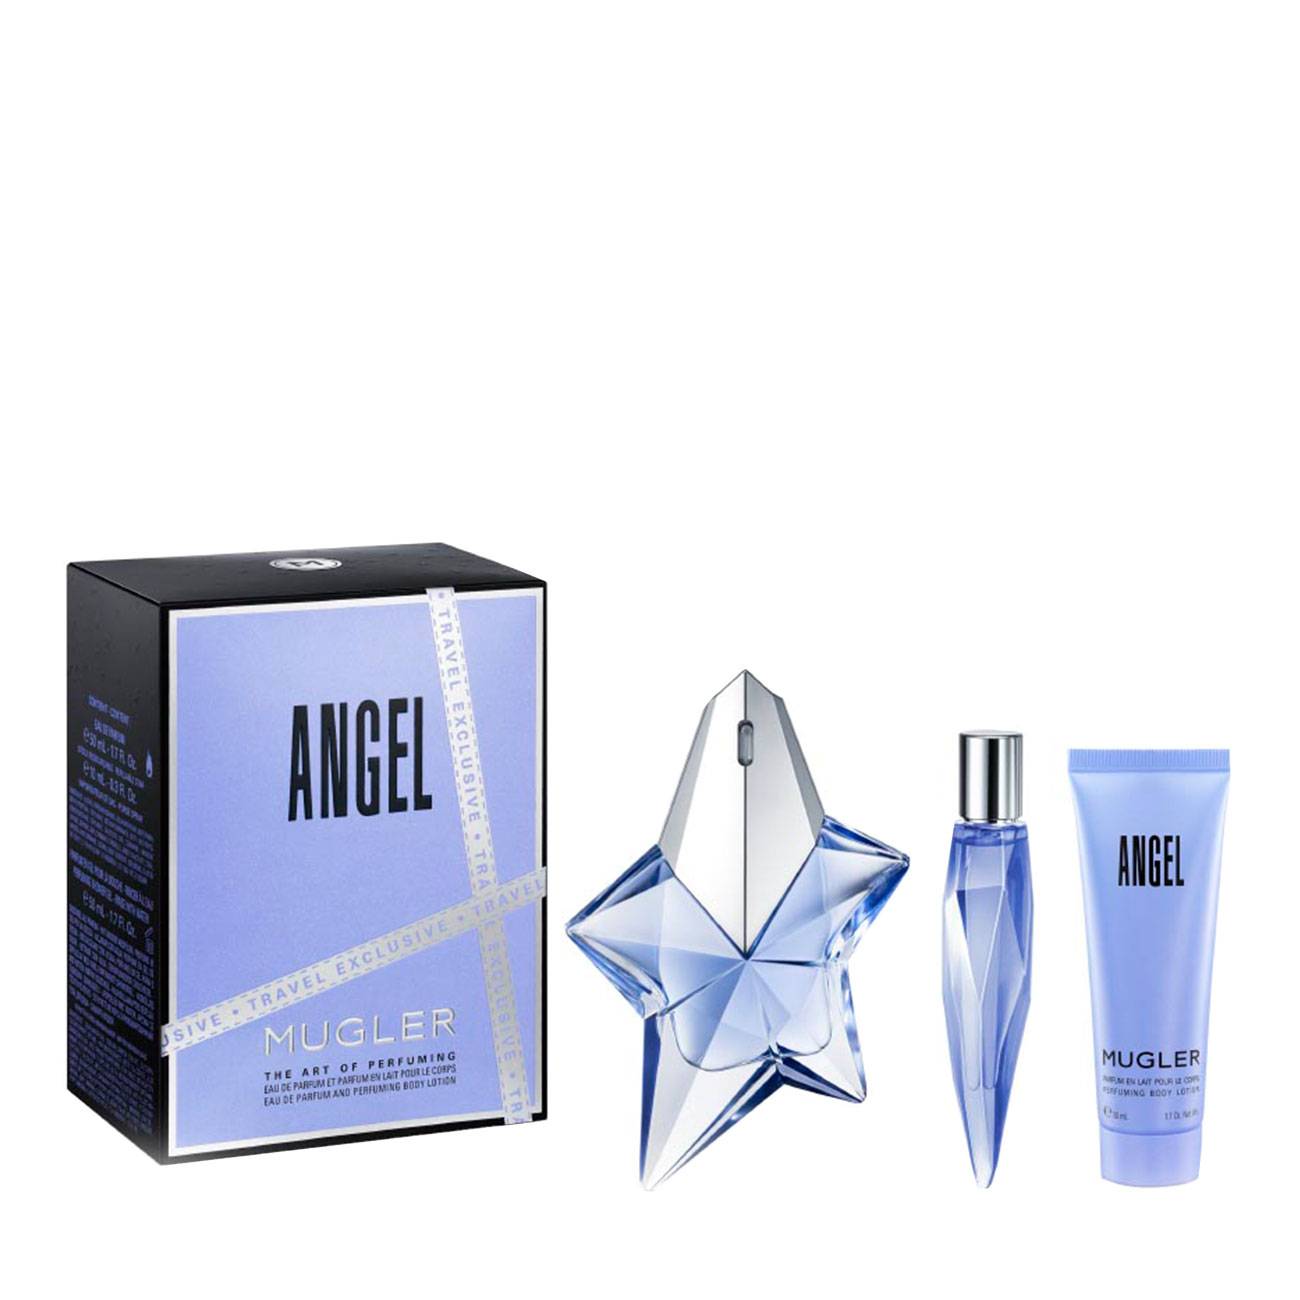 Set parfumuri Thierry Mugler ANGEL THE ART OF PERFUMING SET 110ml cu comanda online